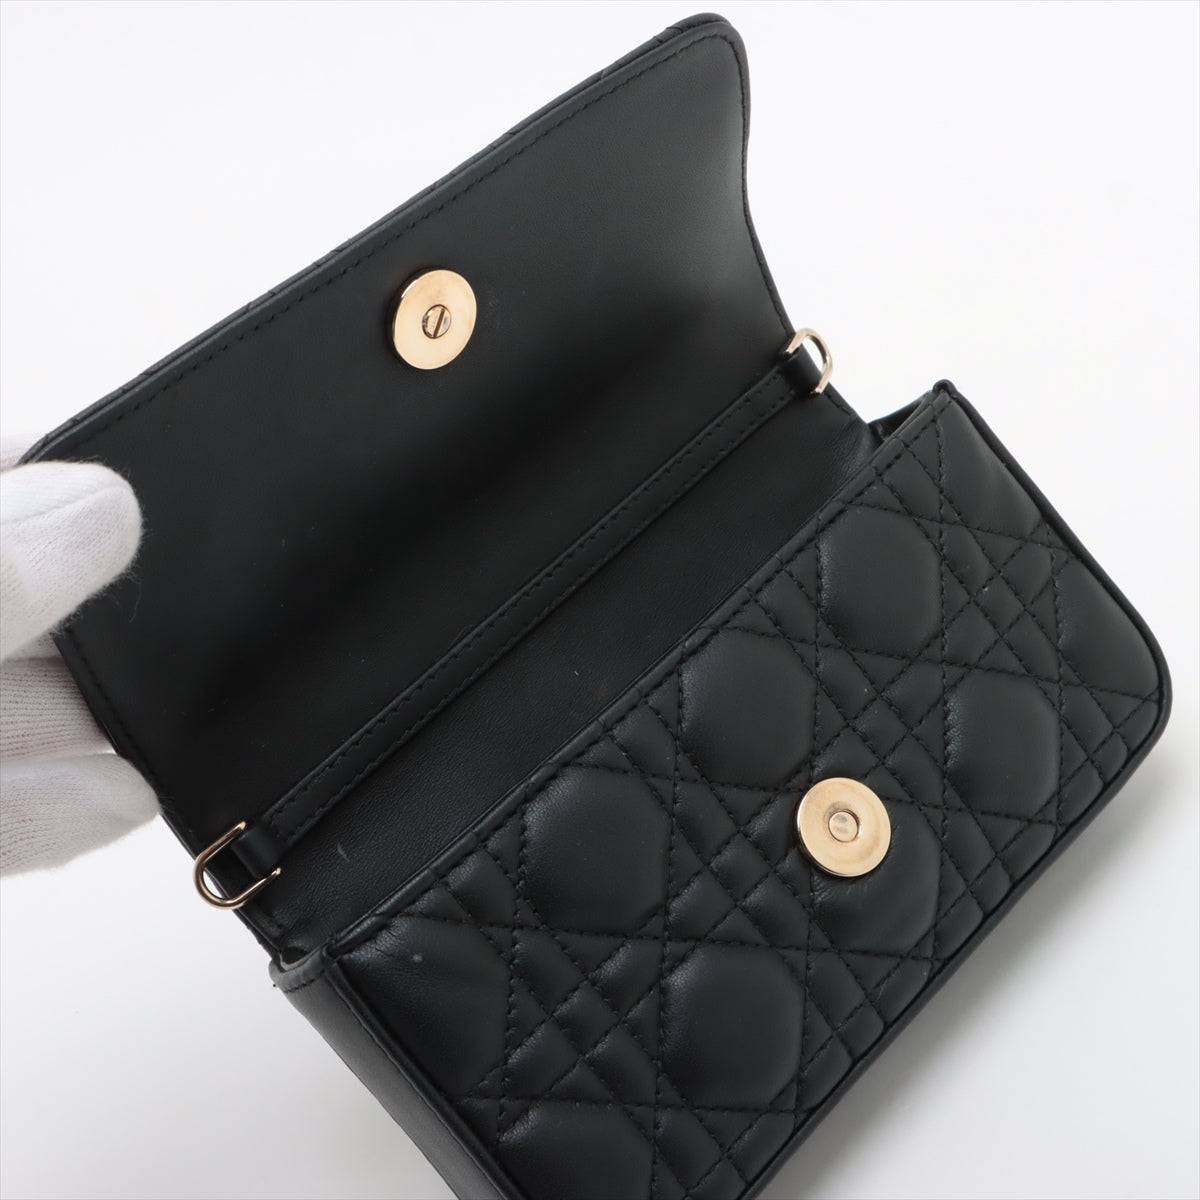 Christian Dior Lady Leather Chain Shoulder Bag Black